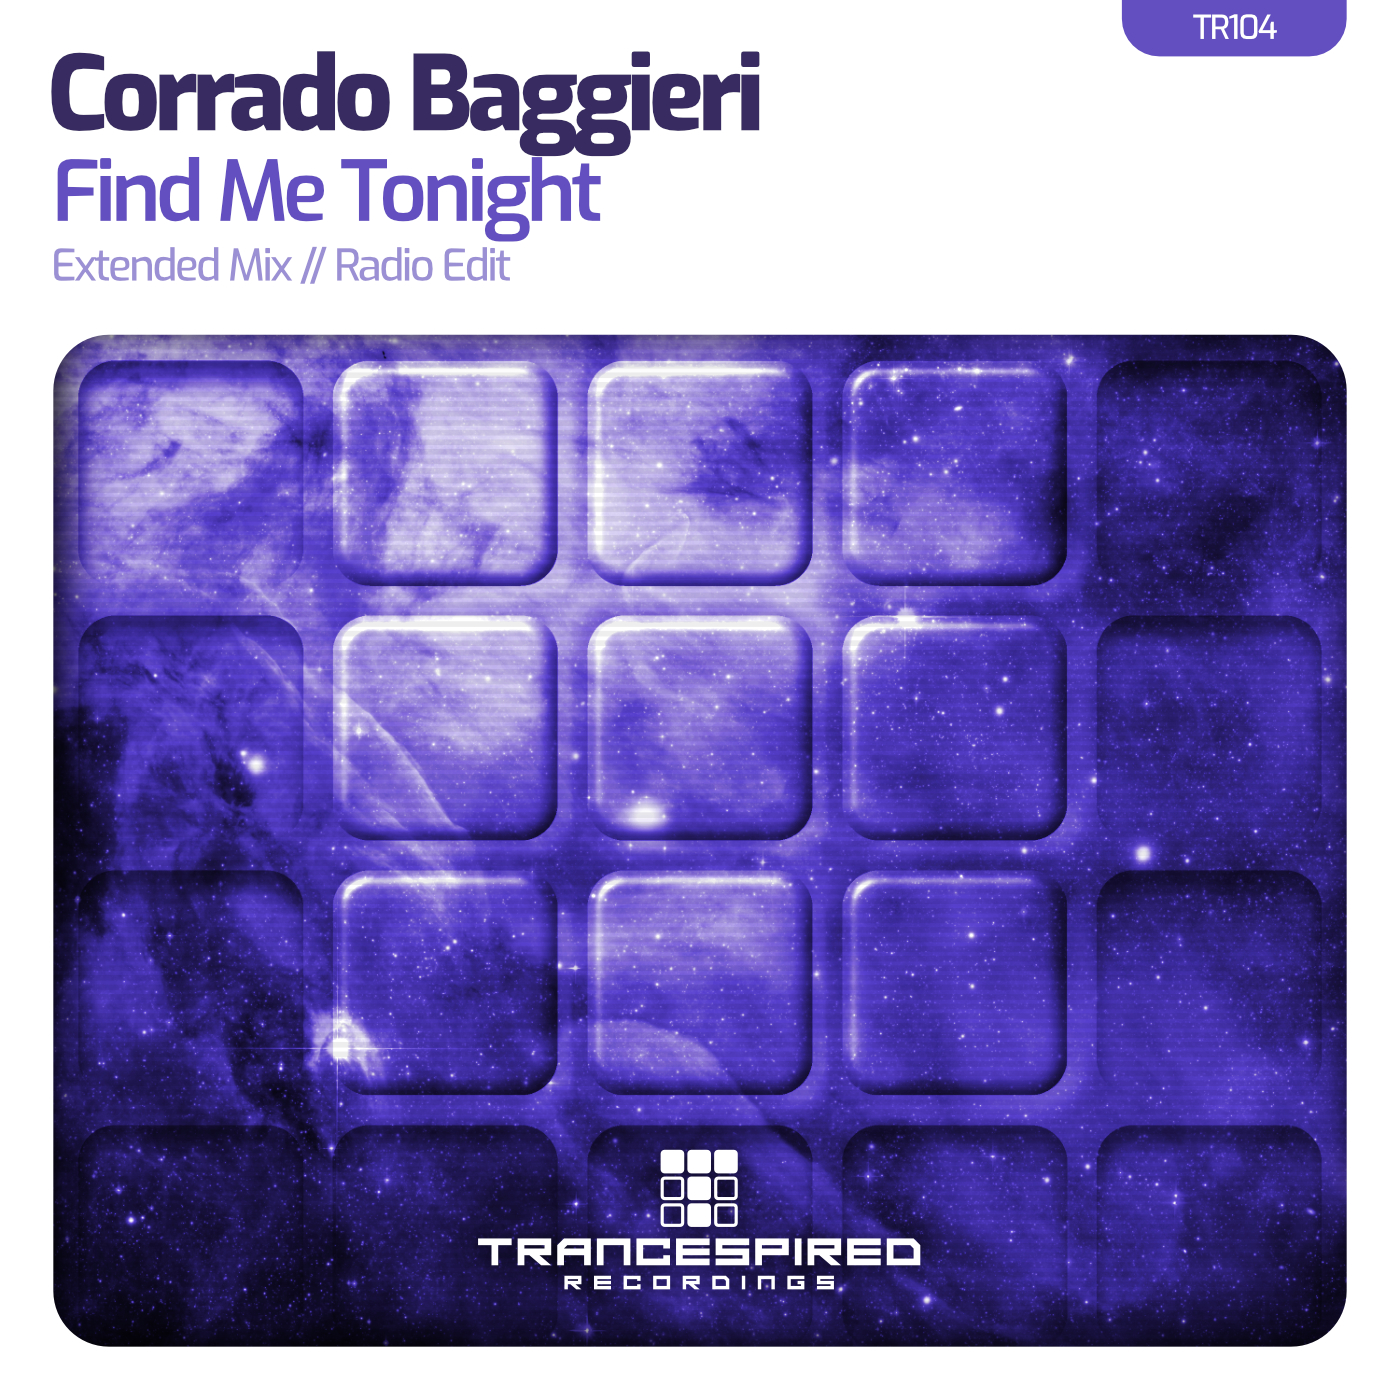 Corrado Baggieri presents Find Me Tonight on Trancespired Recordings